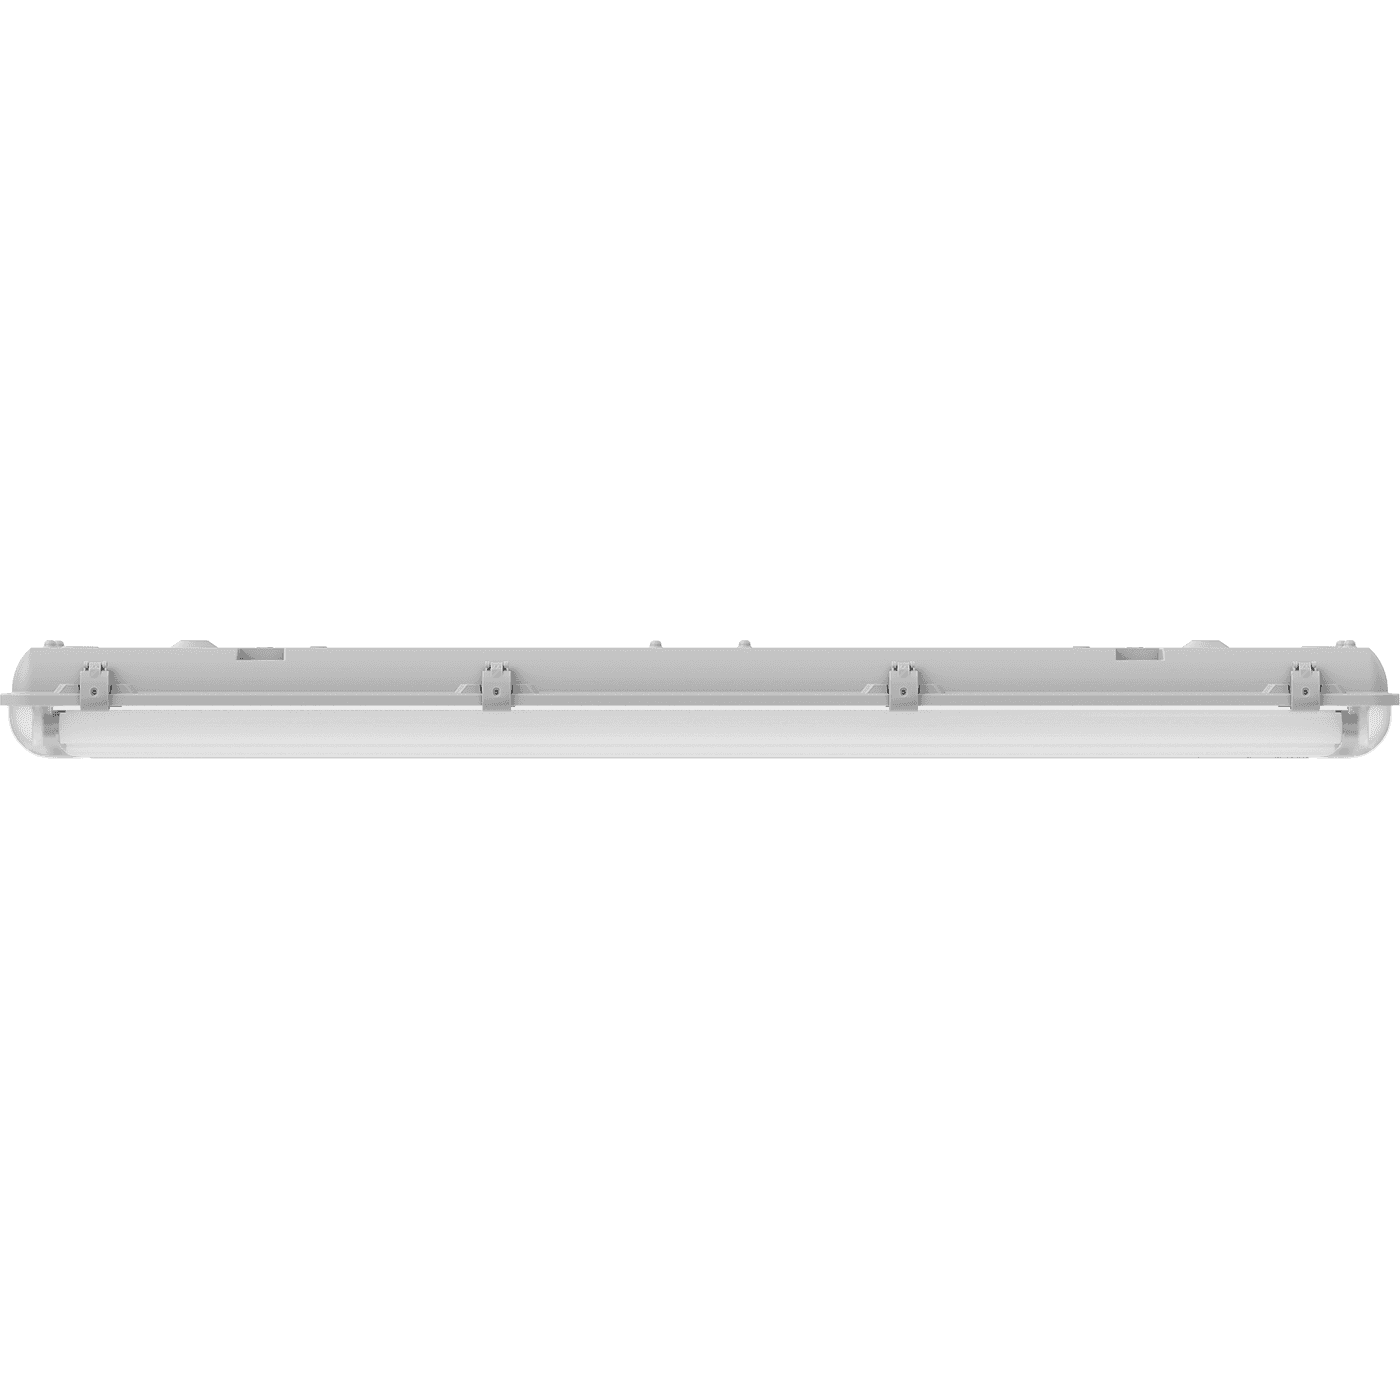 ламповые ARCTIC 236 (SAN/SMC) HF, артикул 1069002410